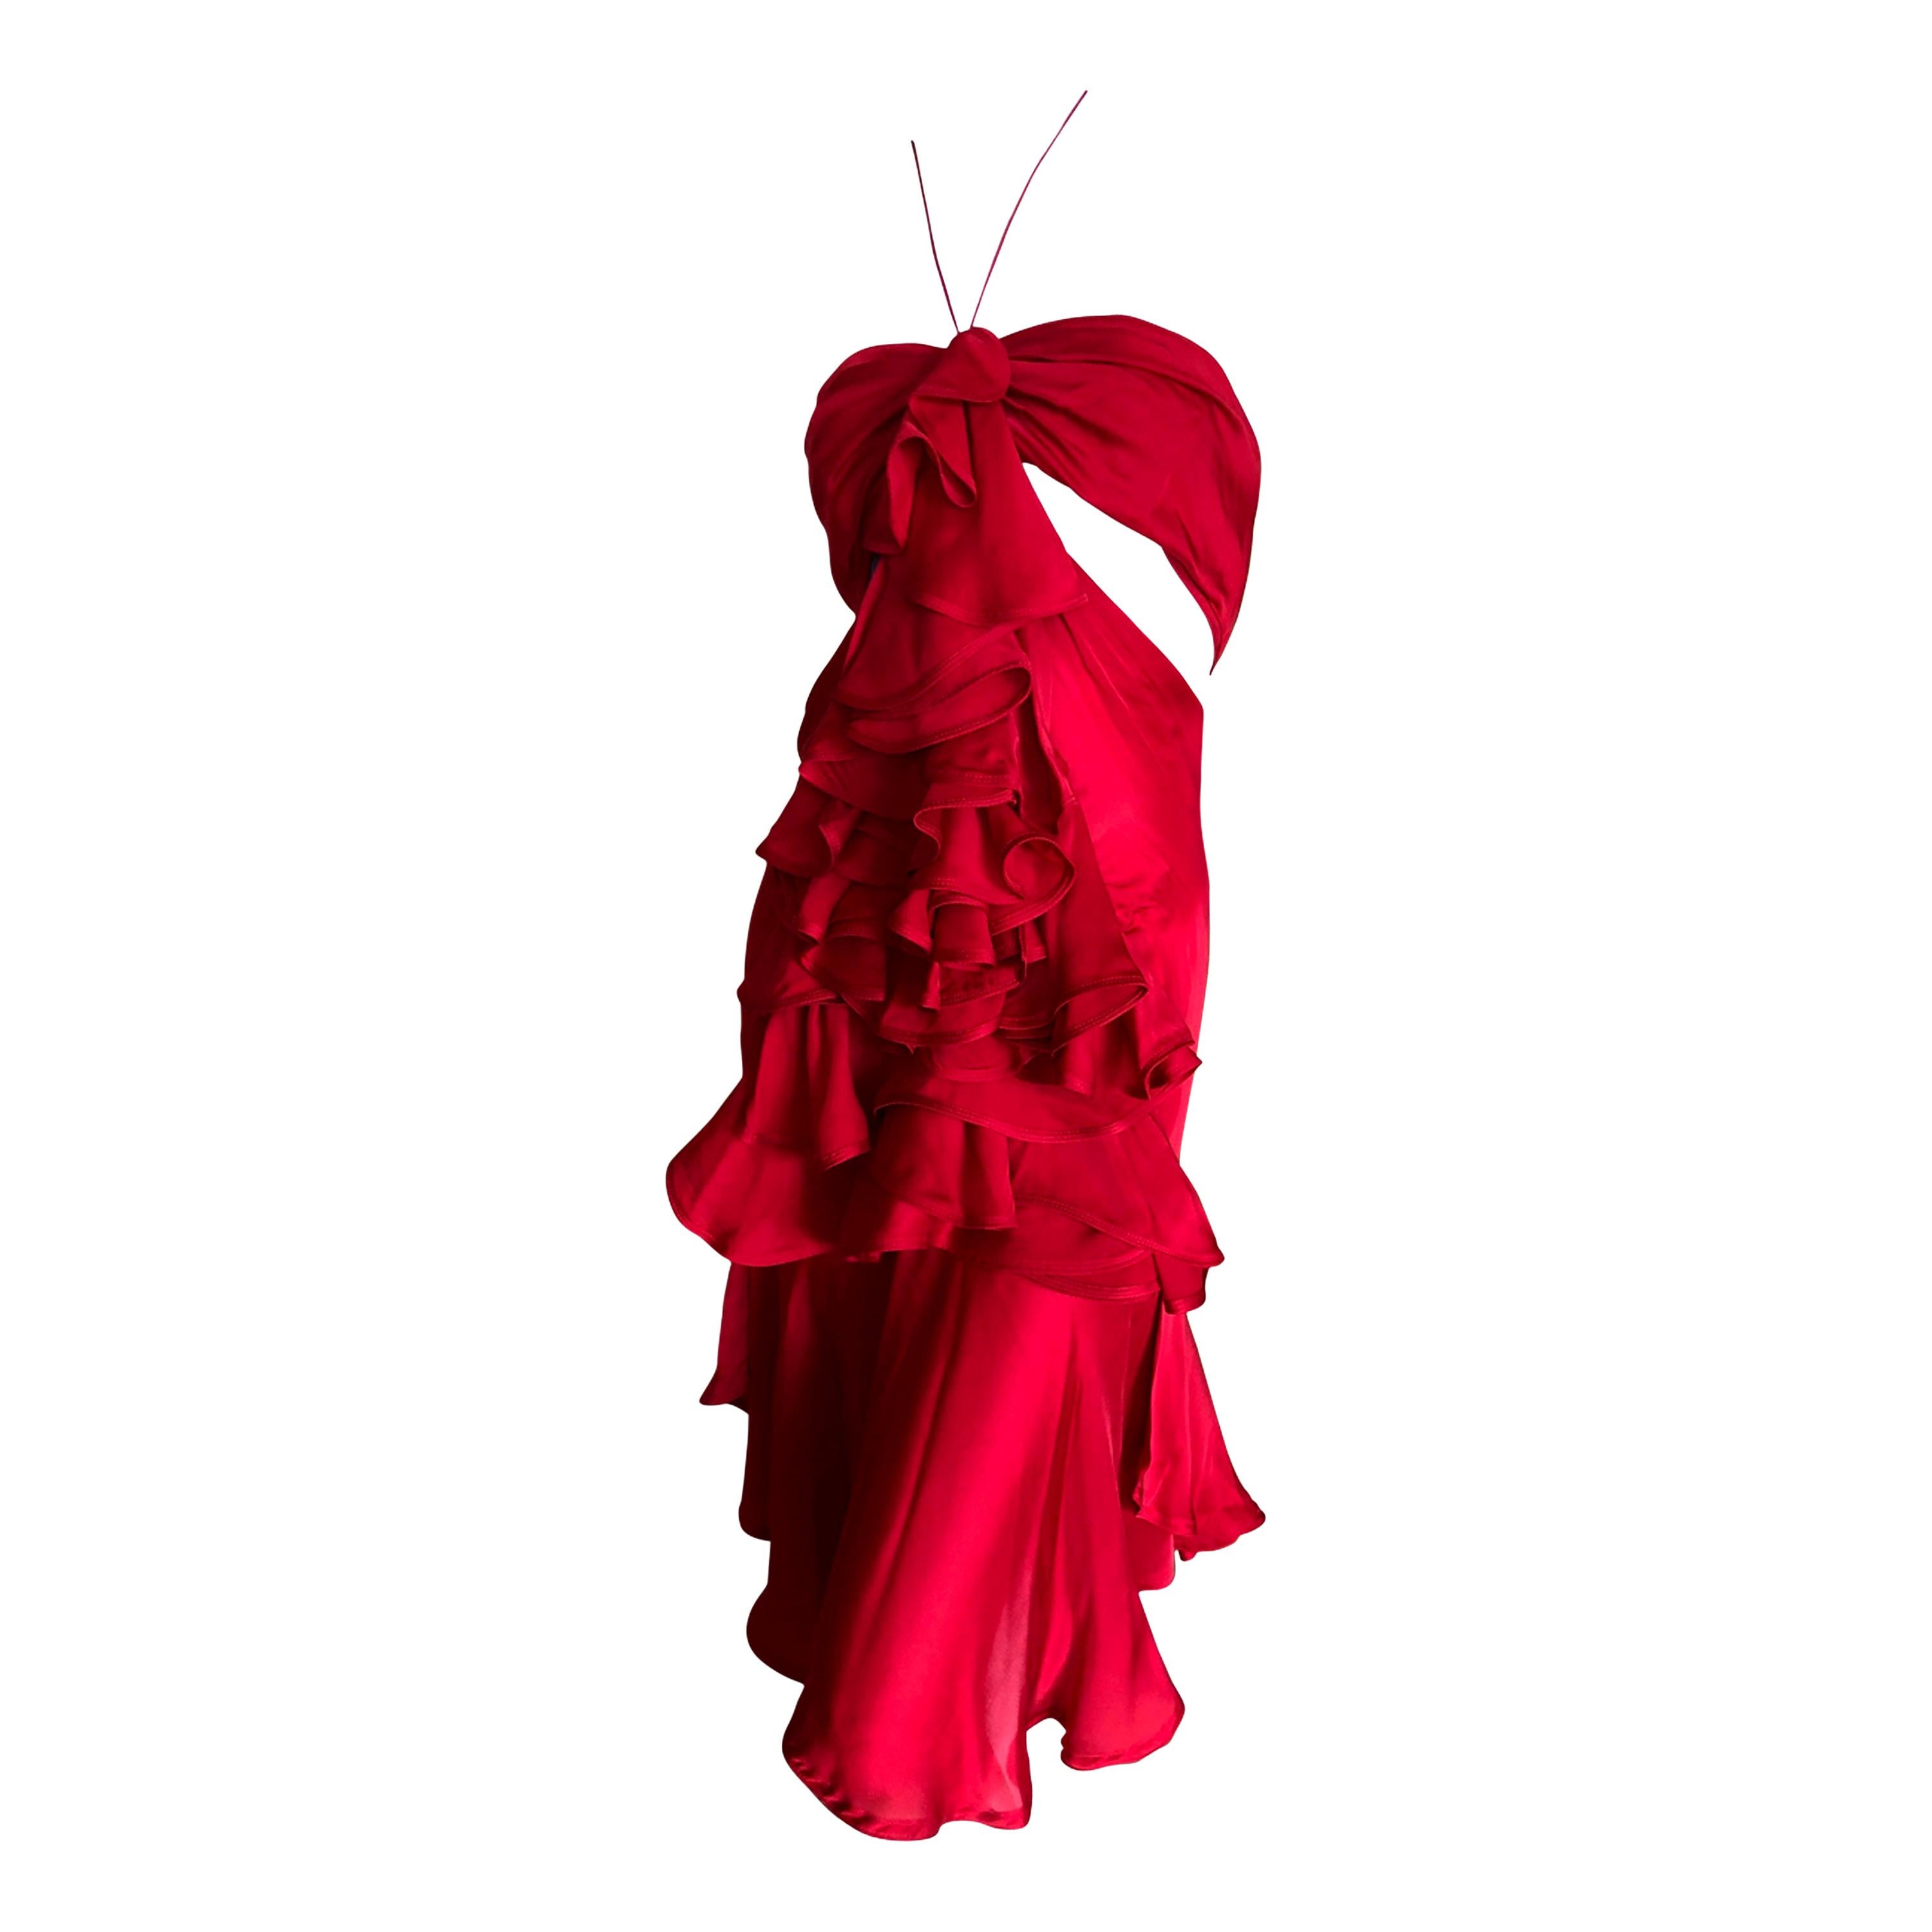 Yves Saint Laurent by Tom Ford 2003 Ruffled Red Silk Dress 